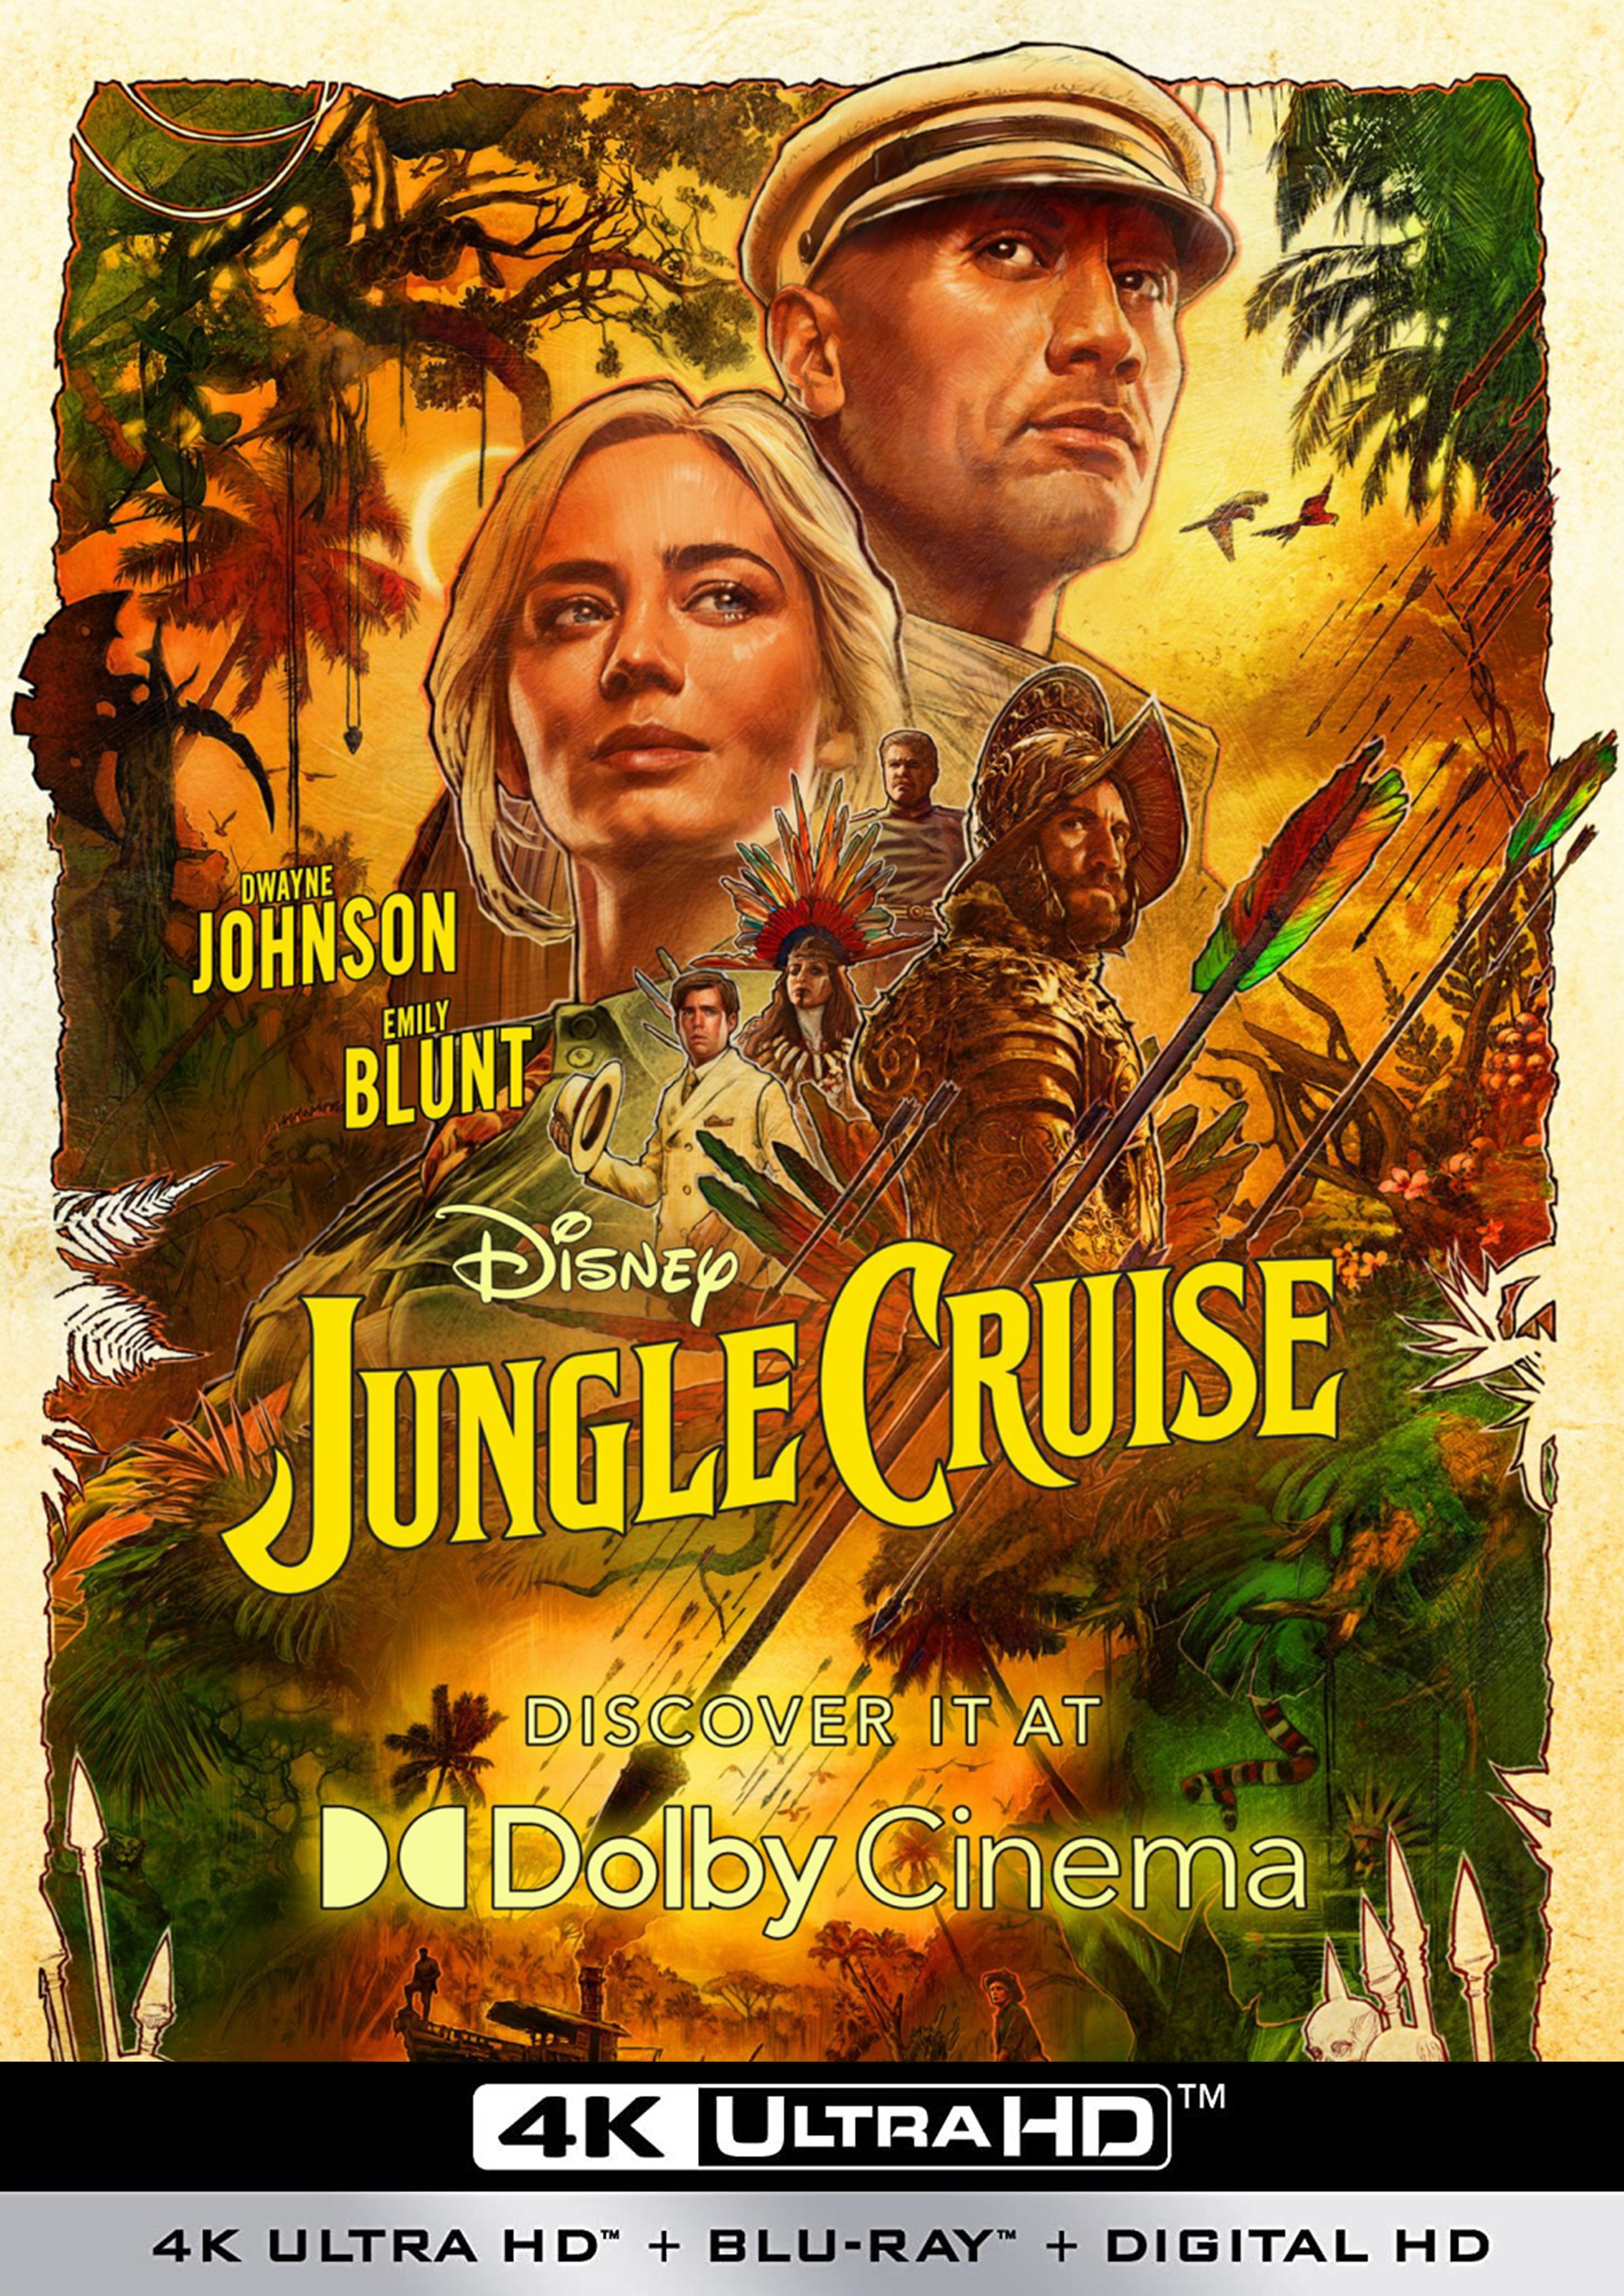 Stiahni si UHD Filmy Expedice: Dzungle / Jungle Cruise (2021)(CZ/EN)(2160p) = CSFD 63%